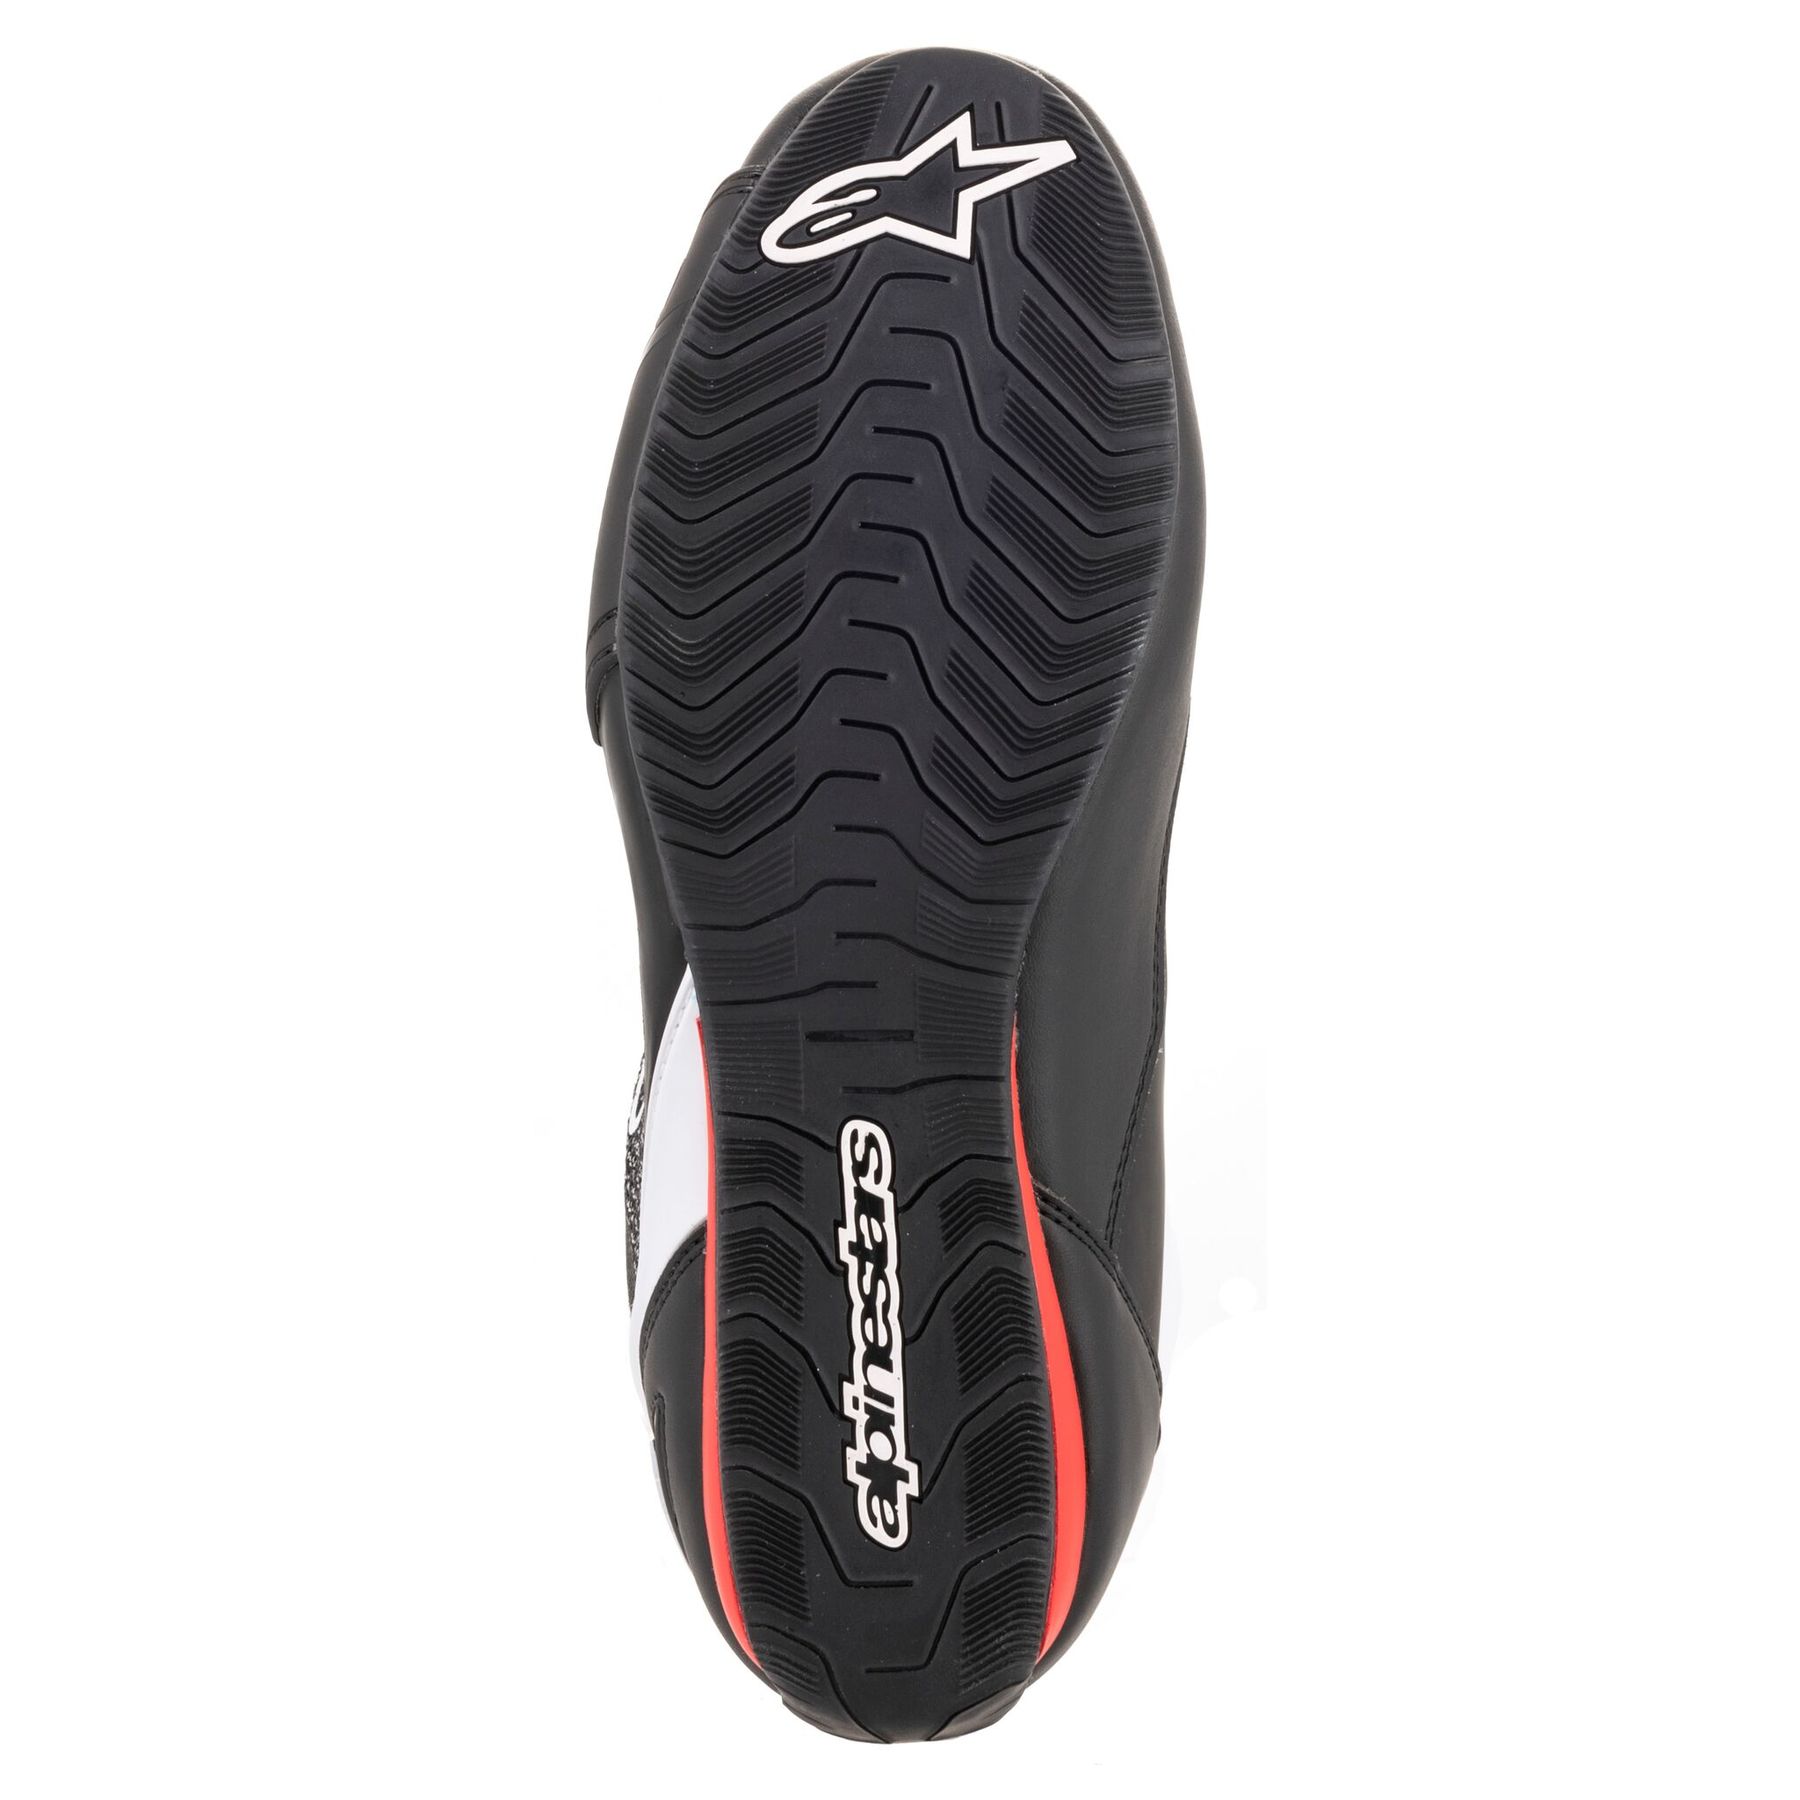 Botas Moto Alpinestars Faster-3 Rideknit Zapatos, Negro - 2510319